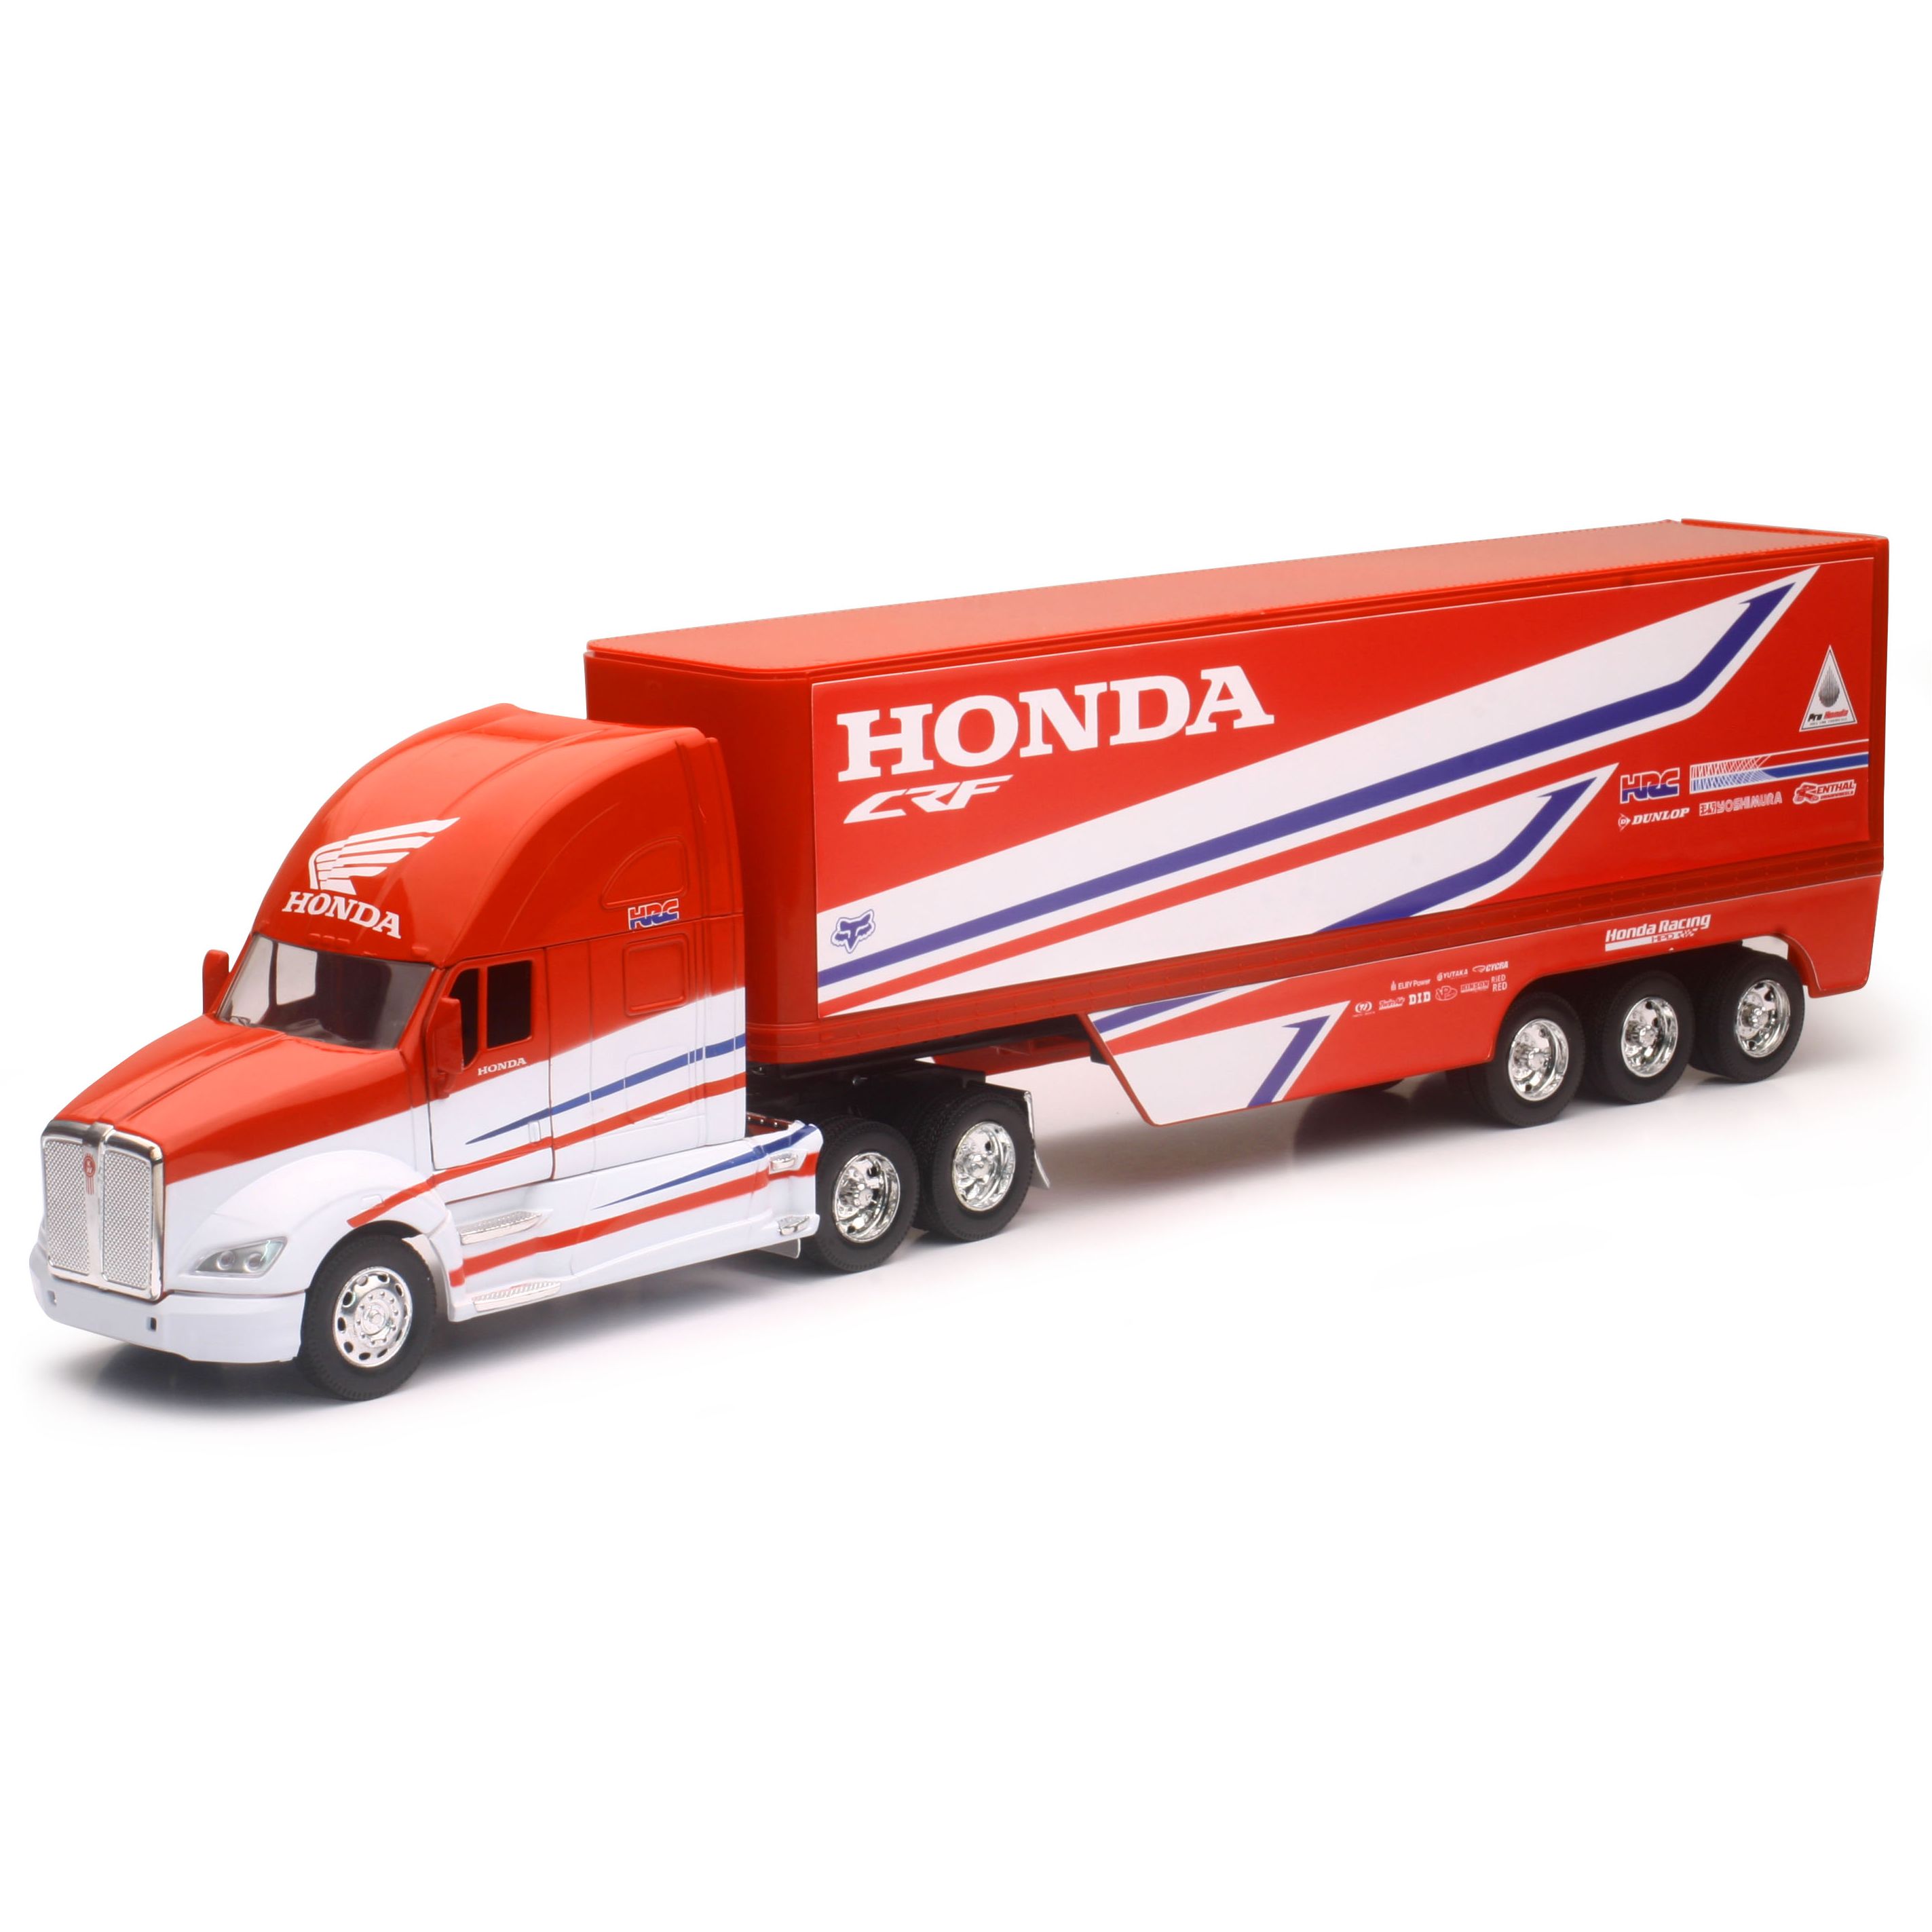 Image of Miniature Newray Camion Team Honda HRC - Echelle 1/32°